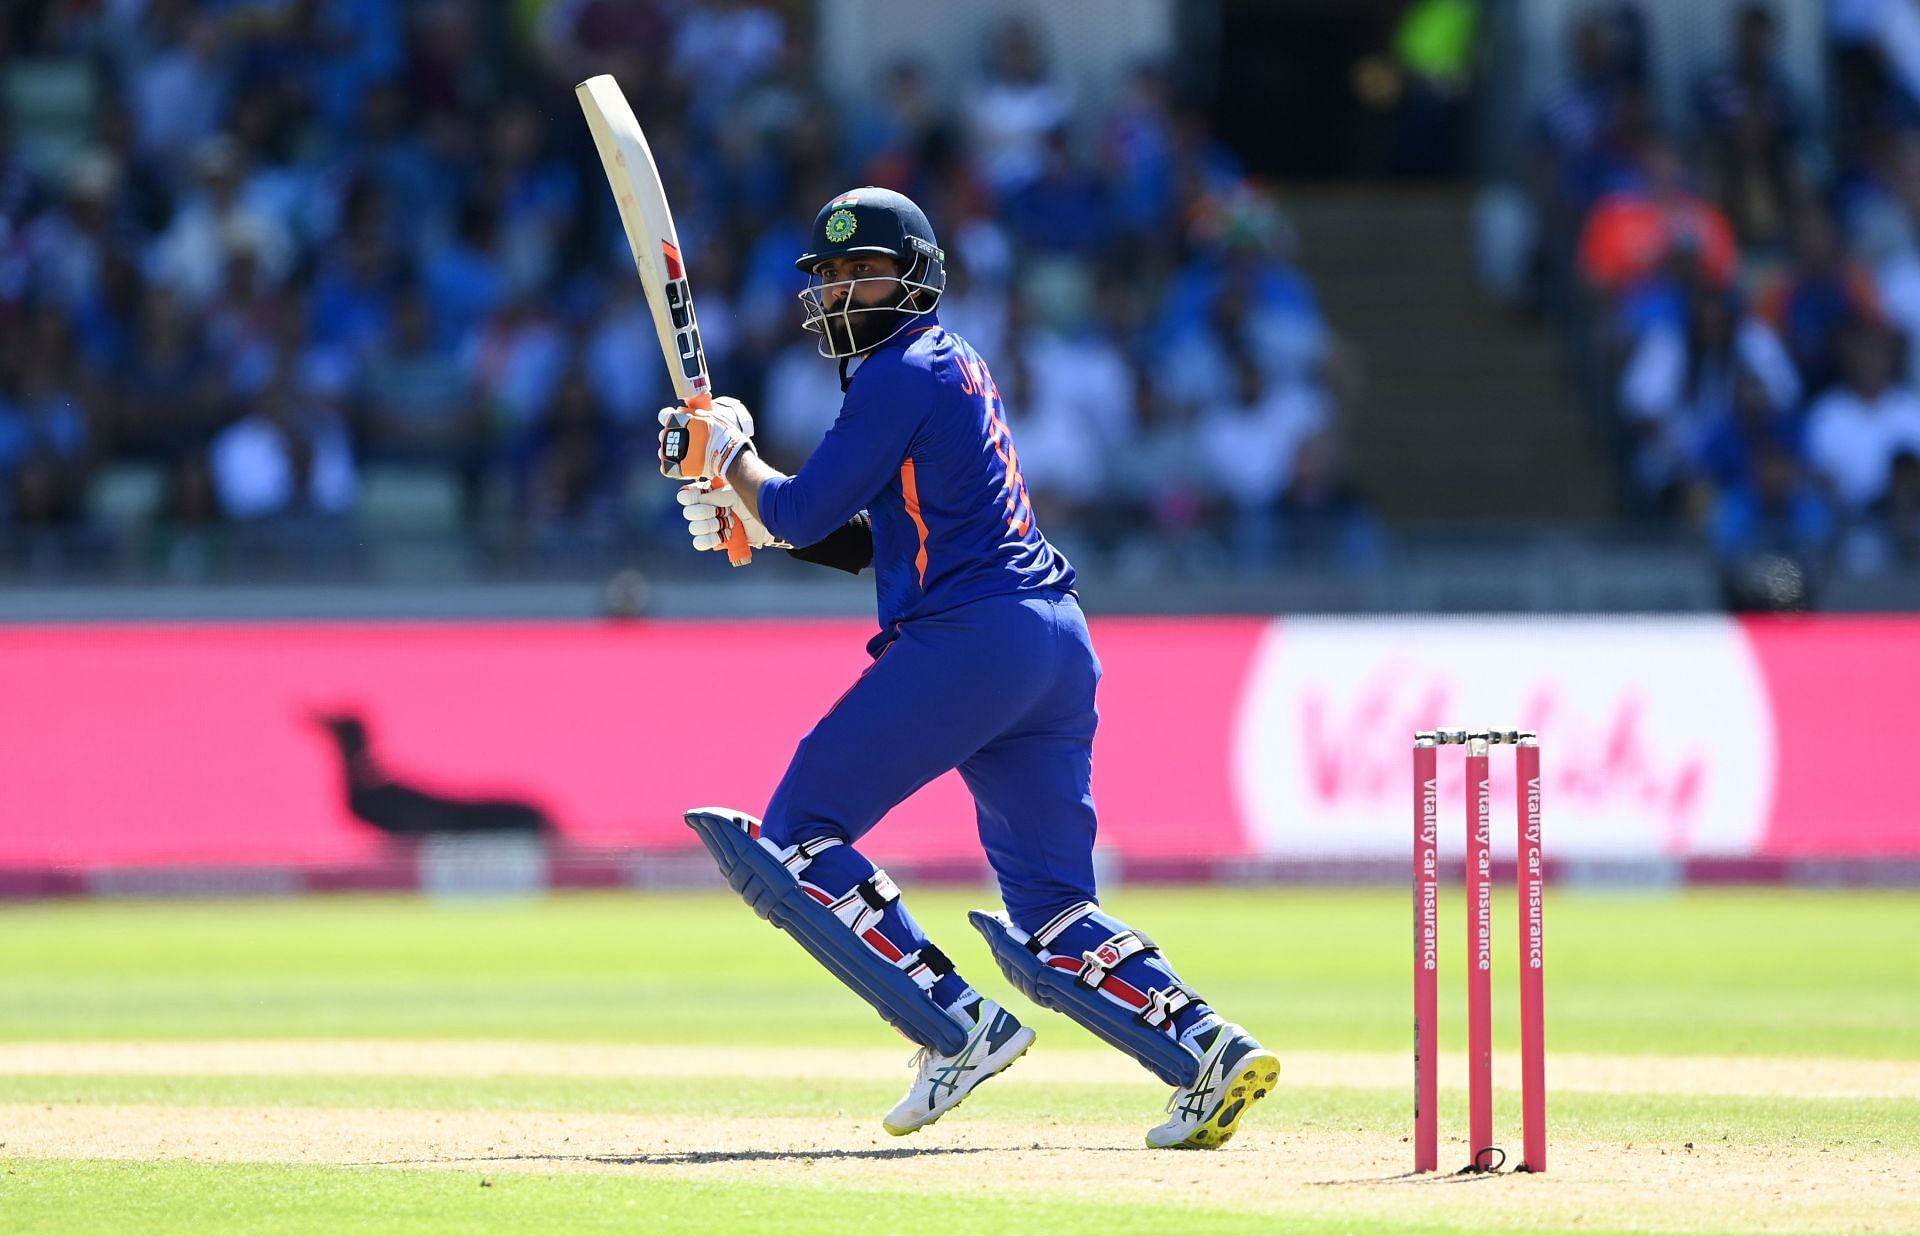 Ravindra Jadeja will look to continue his good run against West Indies